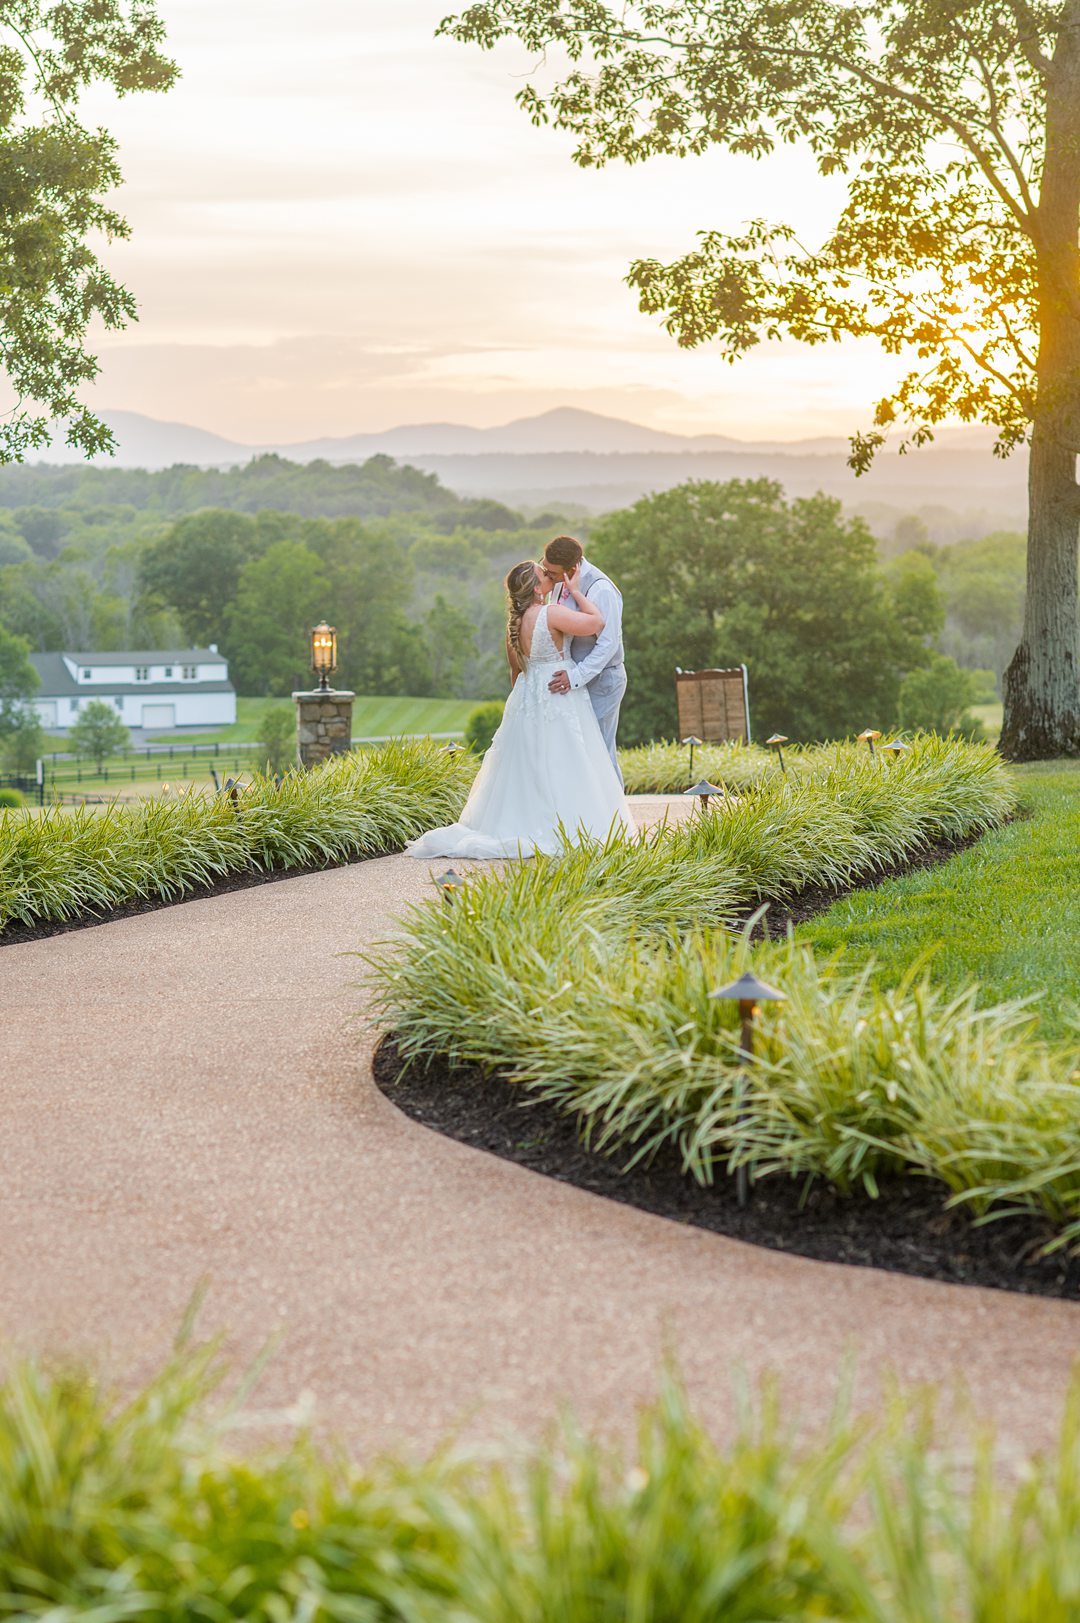 Sunset photo at the Lodge at Mount Ida farm with the bride and groom by Mikkel Paige Photography. #charlottesvillewedding #mikkelpaige #sunsetphotos #brideandgroom